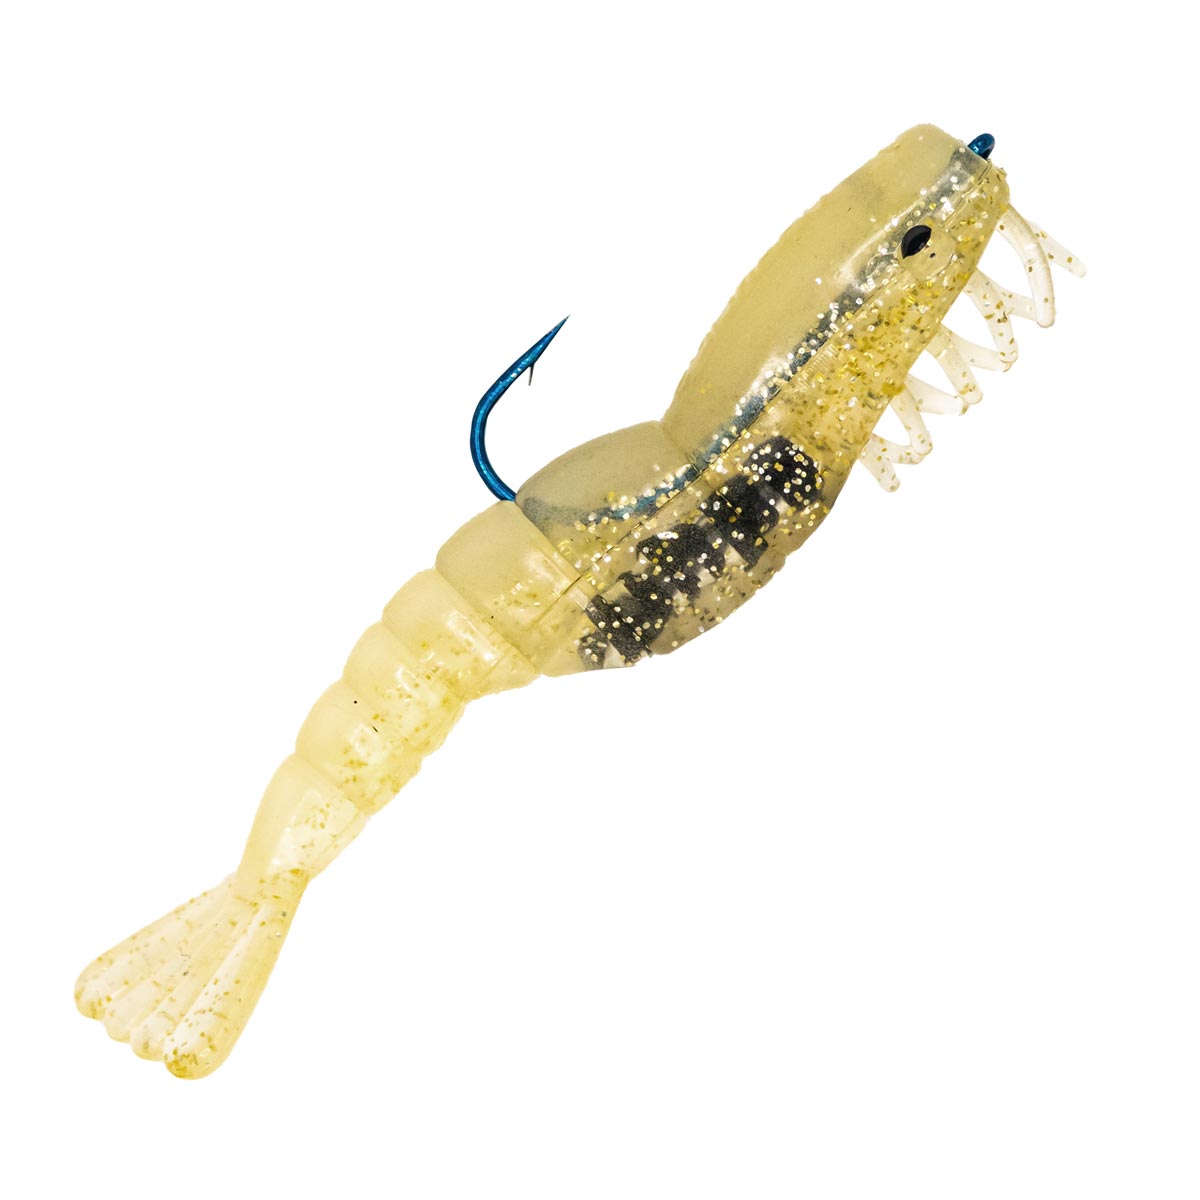 D.O.A. 3 Shrimp - Rootbeer/Gold Glitter , doa shrimp lures fishing